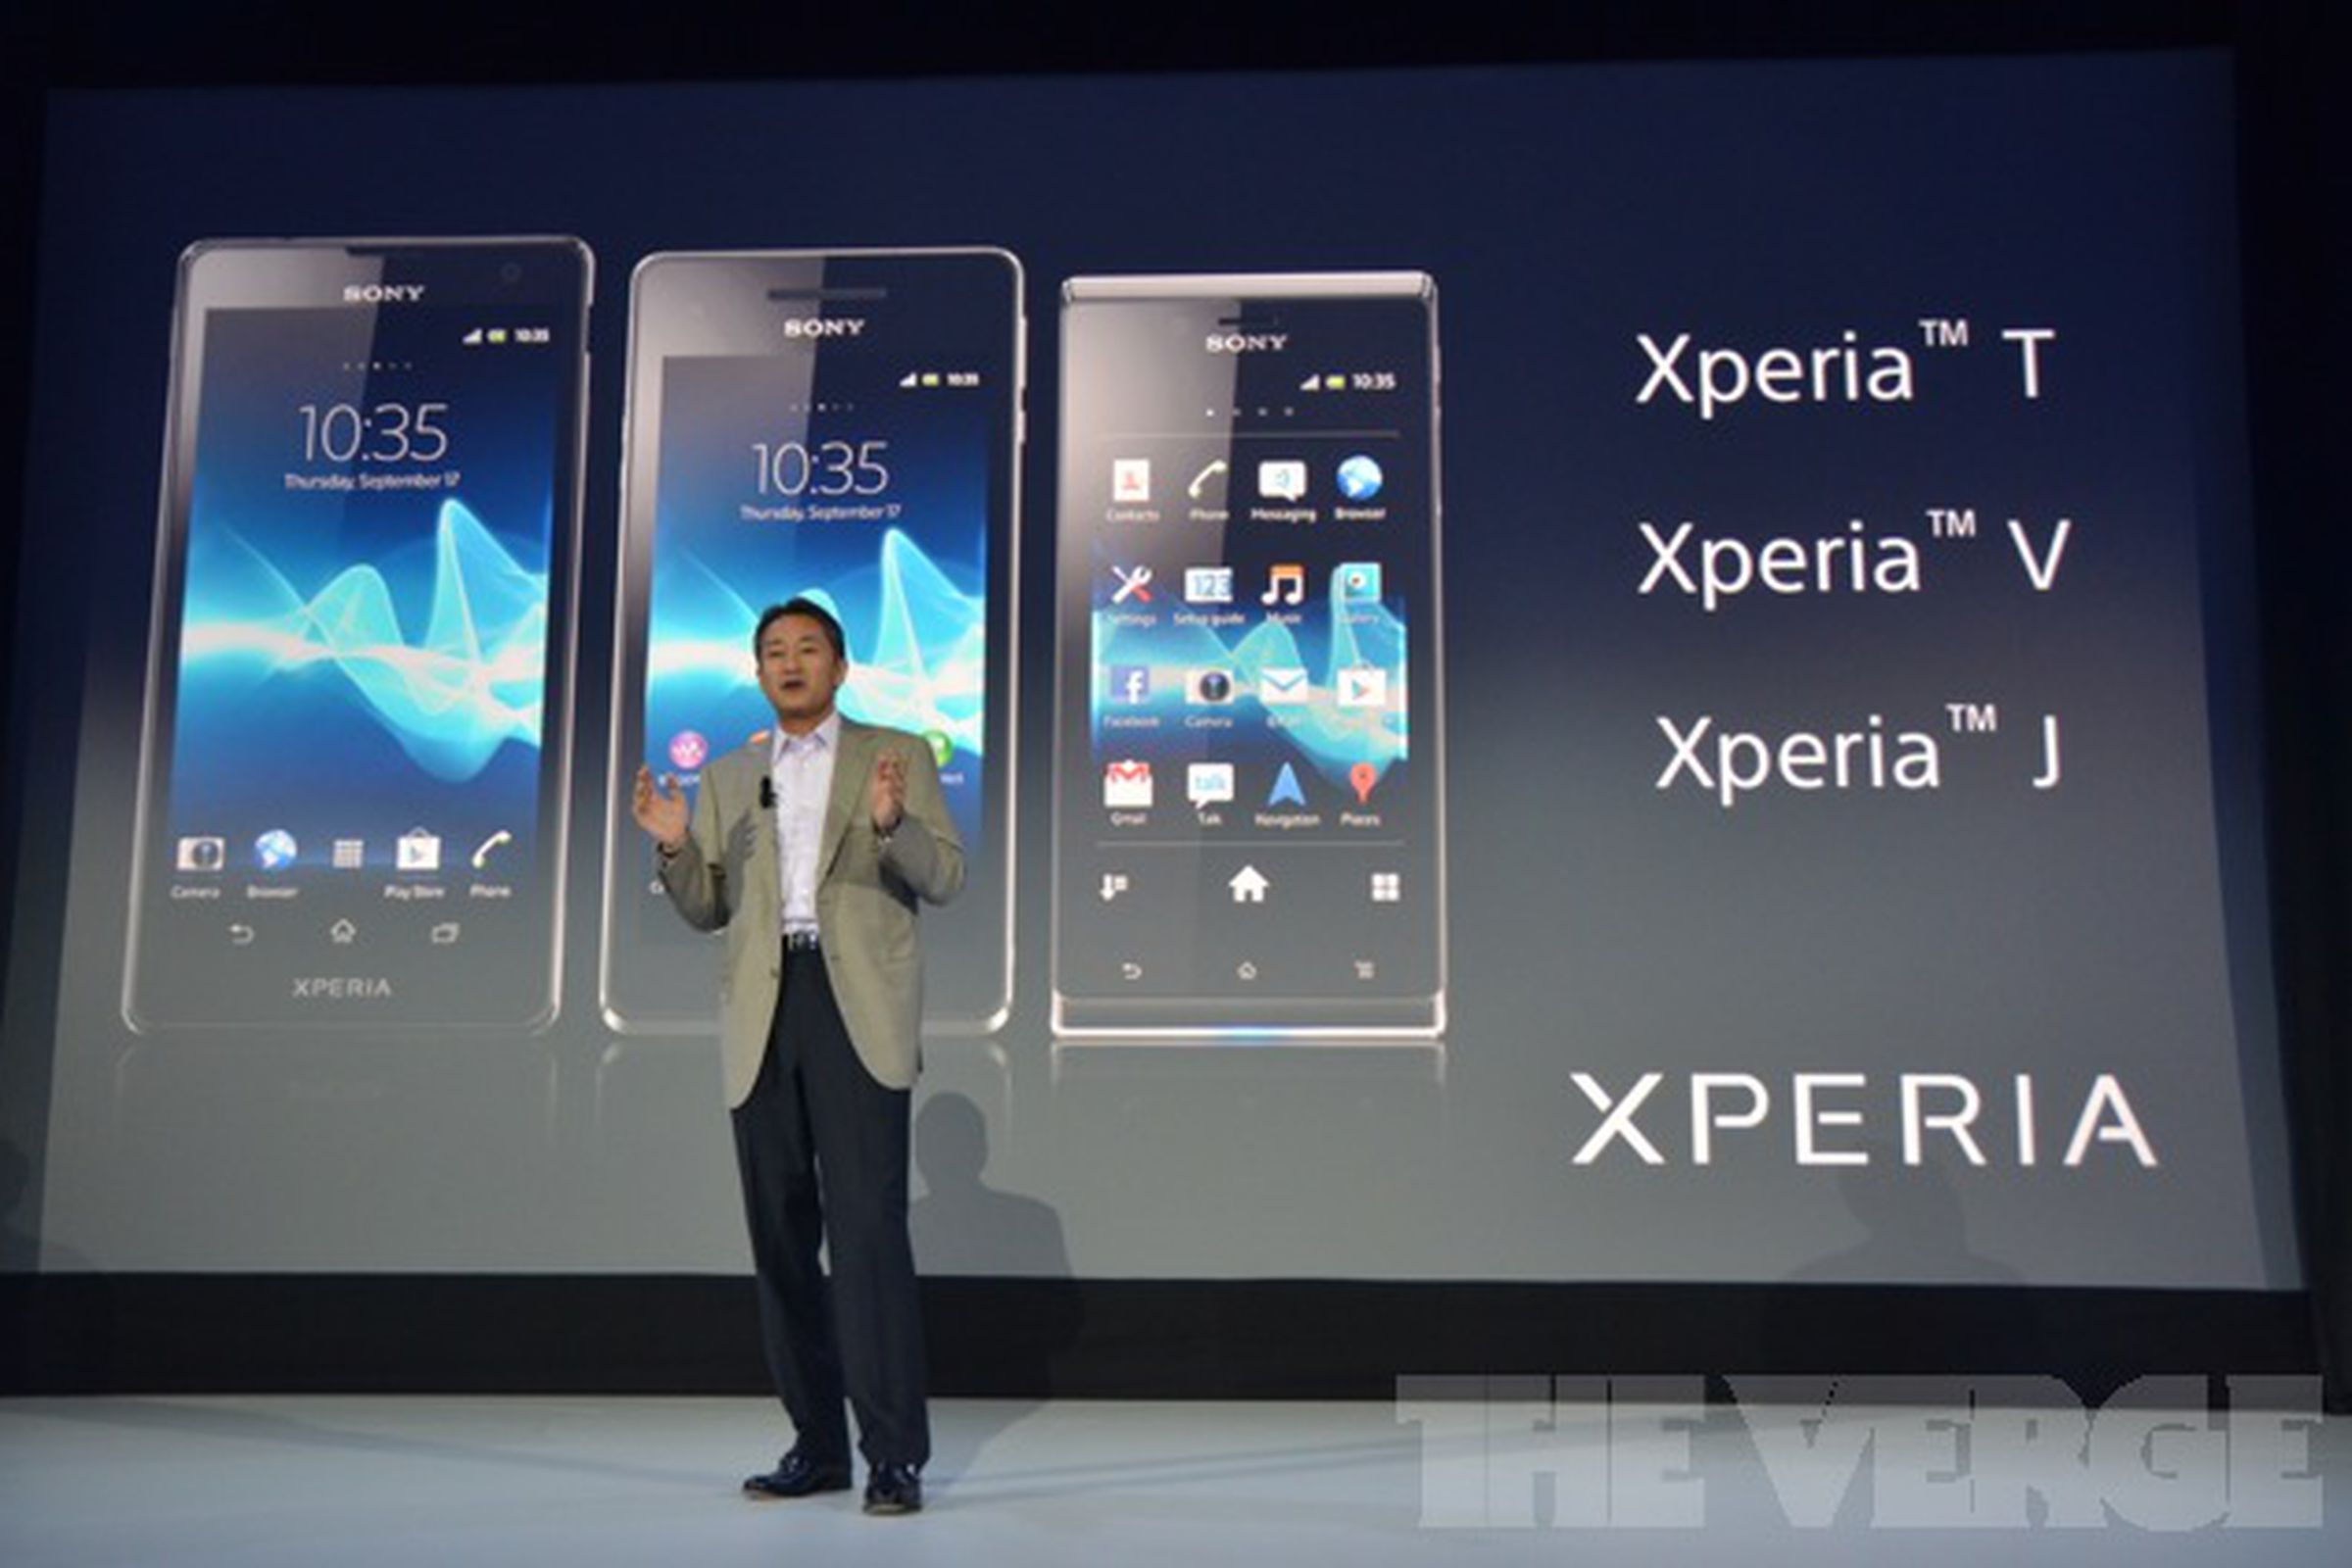 Sony Xperia smartphones at IFA